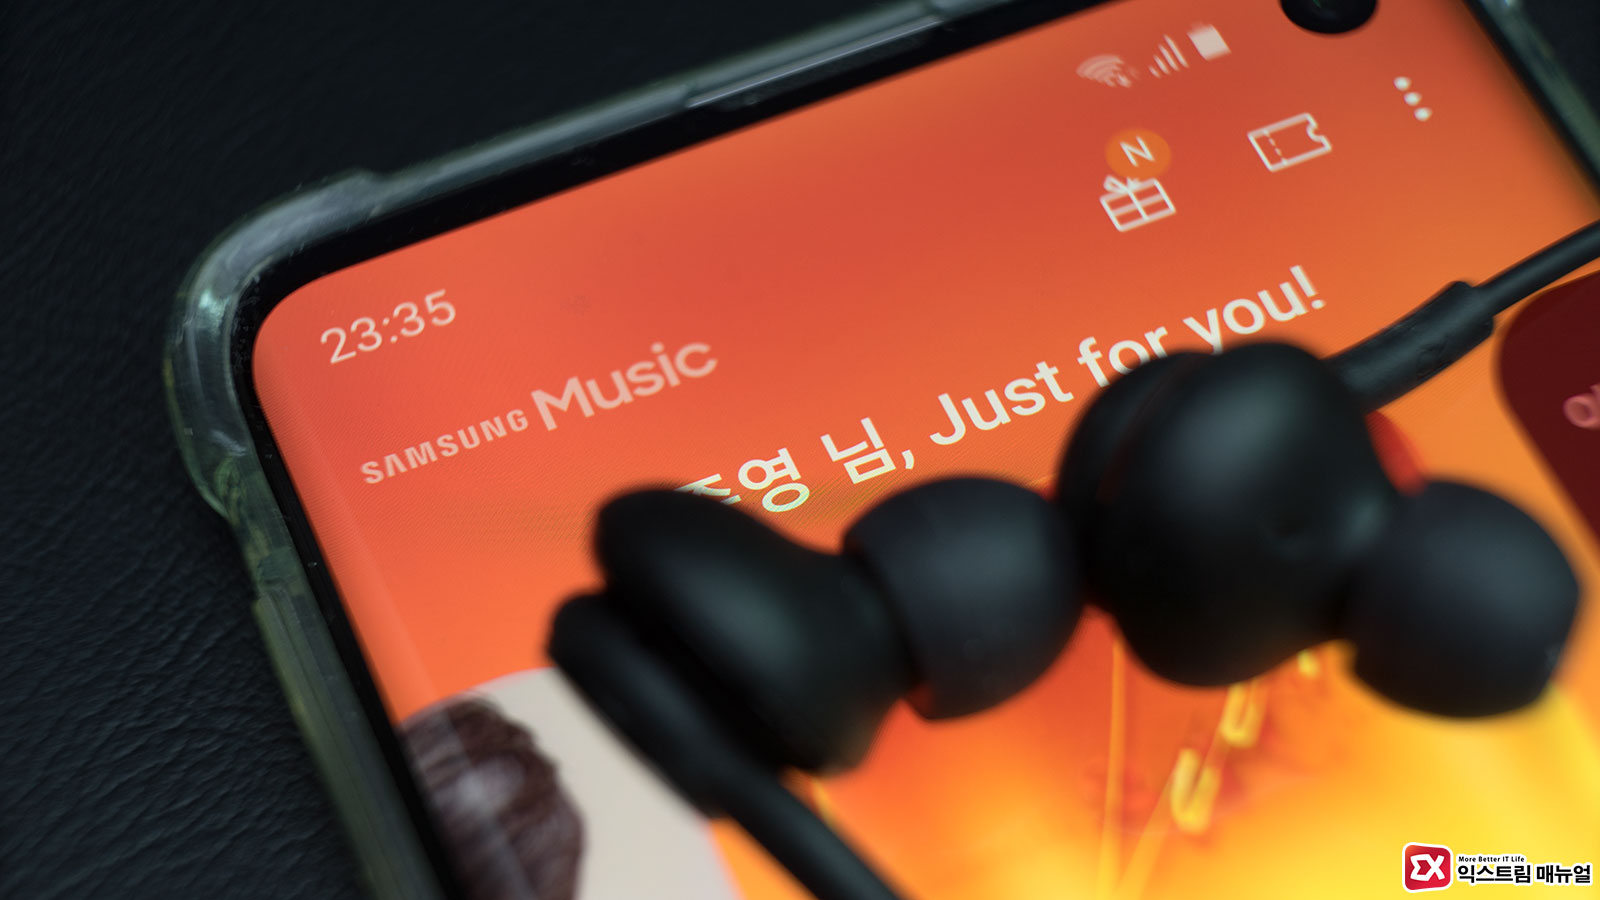 Samsung Music Title